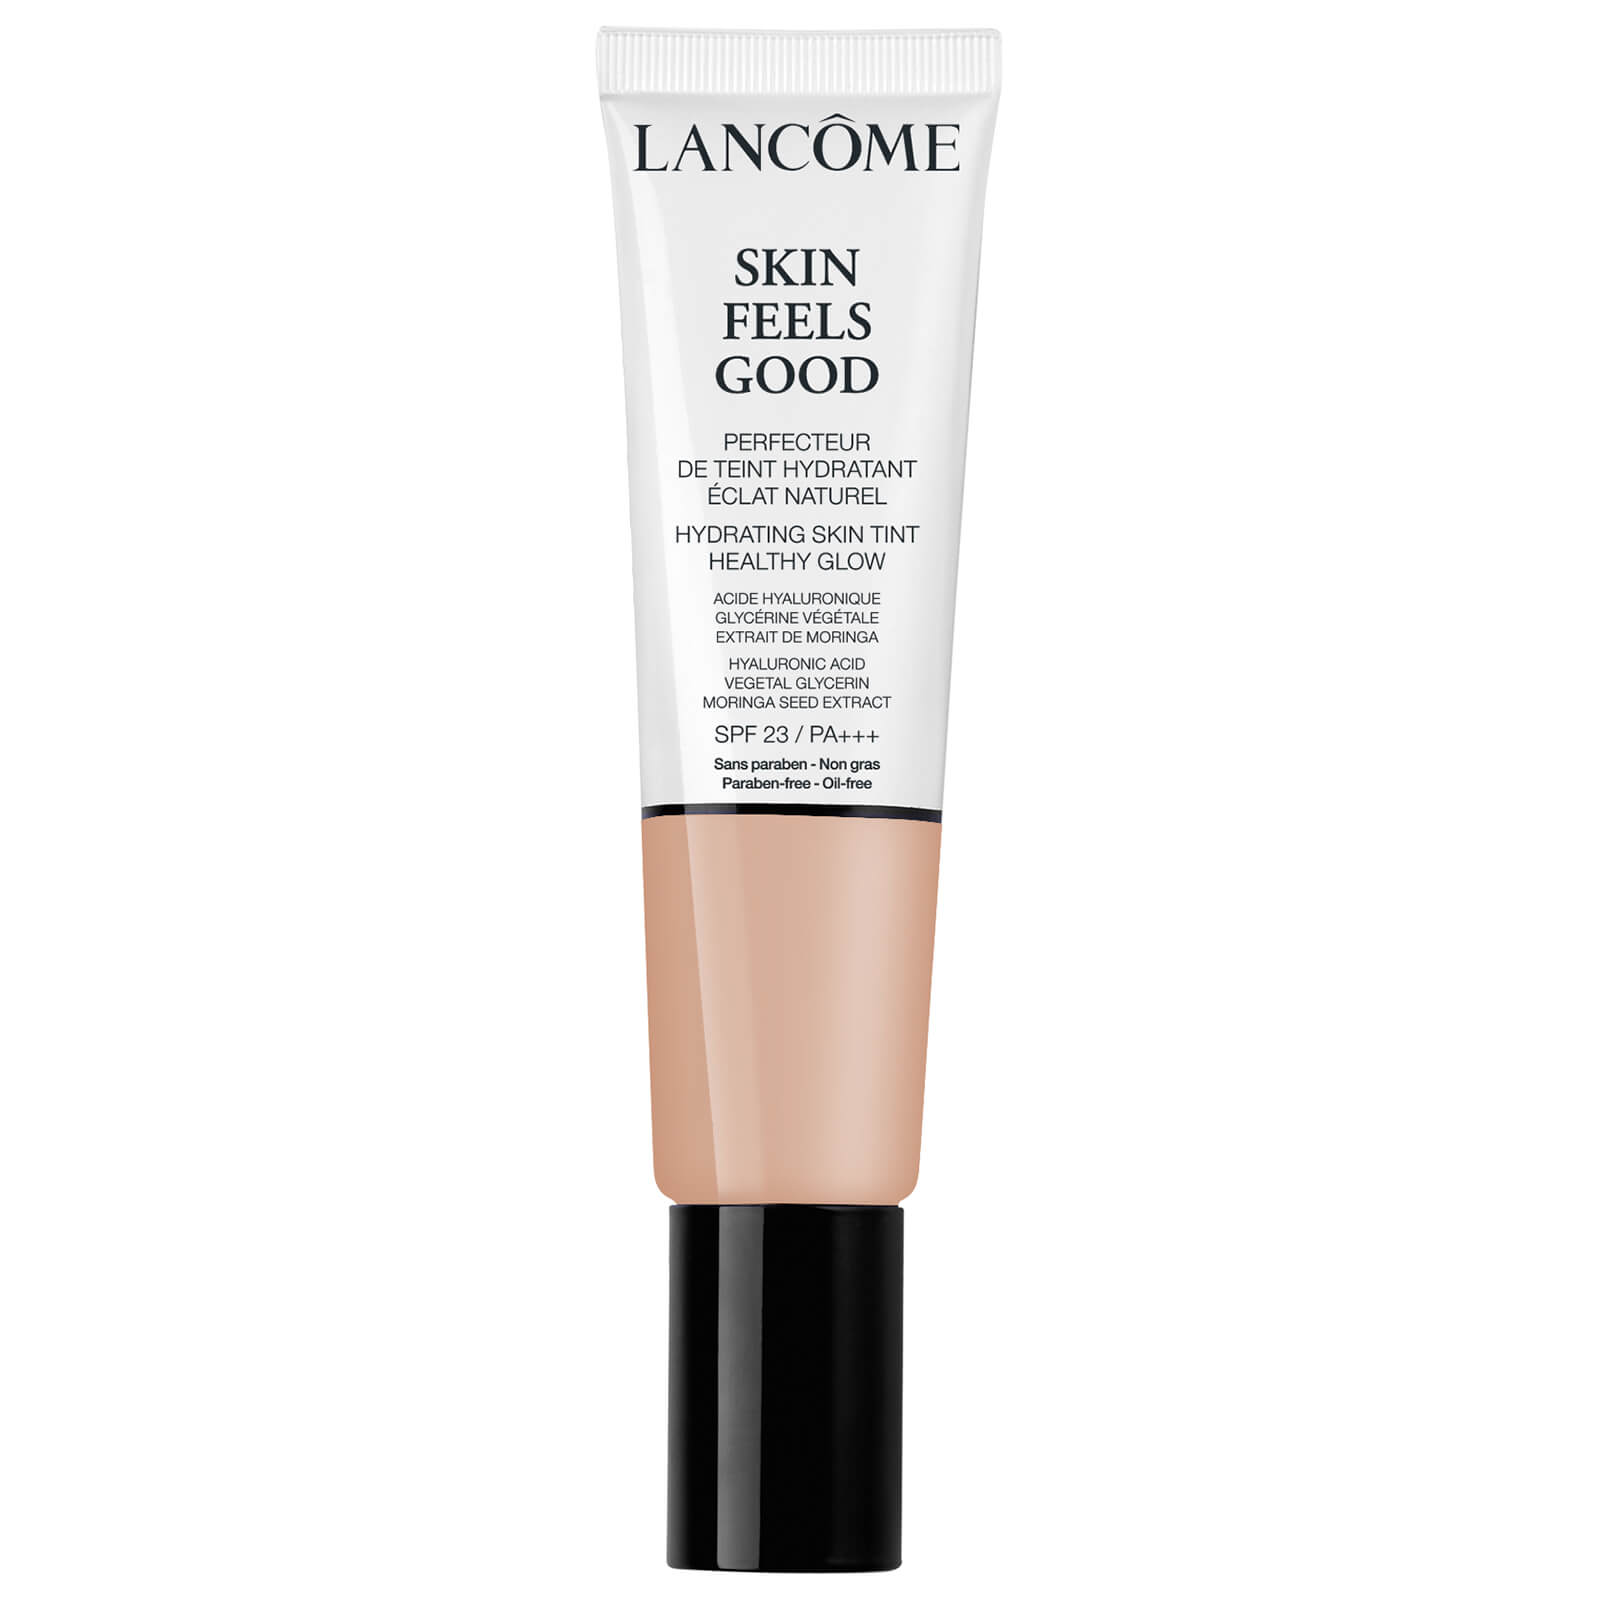 Lancôme Skin Feels Good Foundation 32ml (Various Shades) - Soft Beige 025